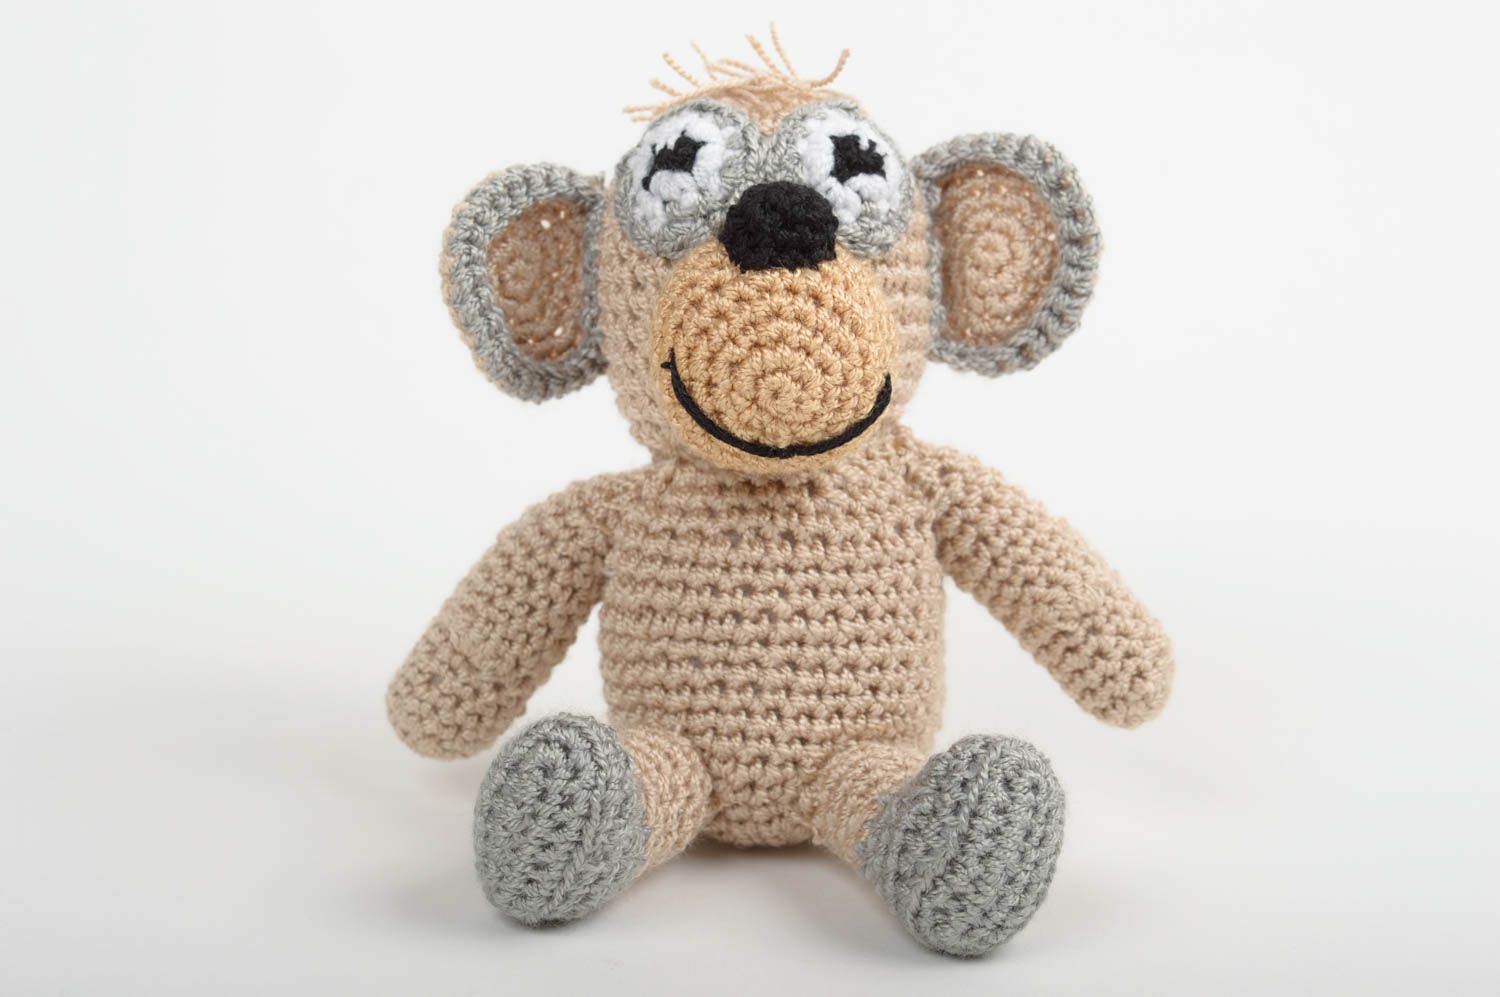 Handmade toy crochet stuffed animals nursery decor gift ideas for kids photo 5